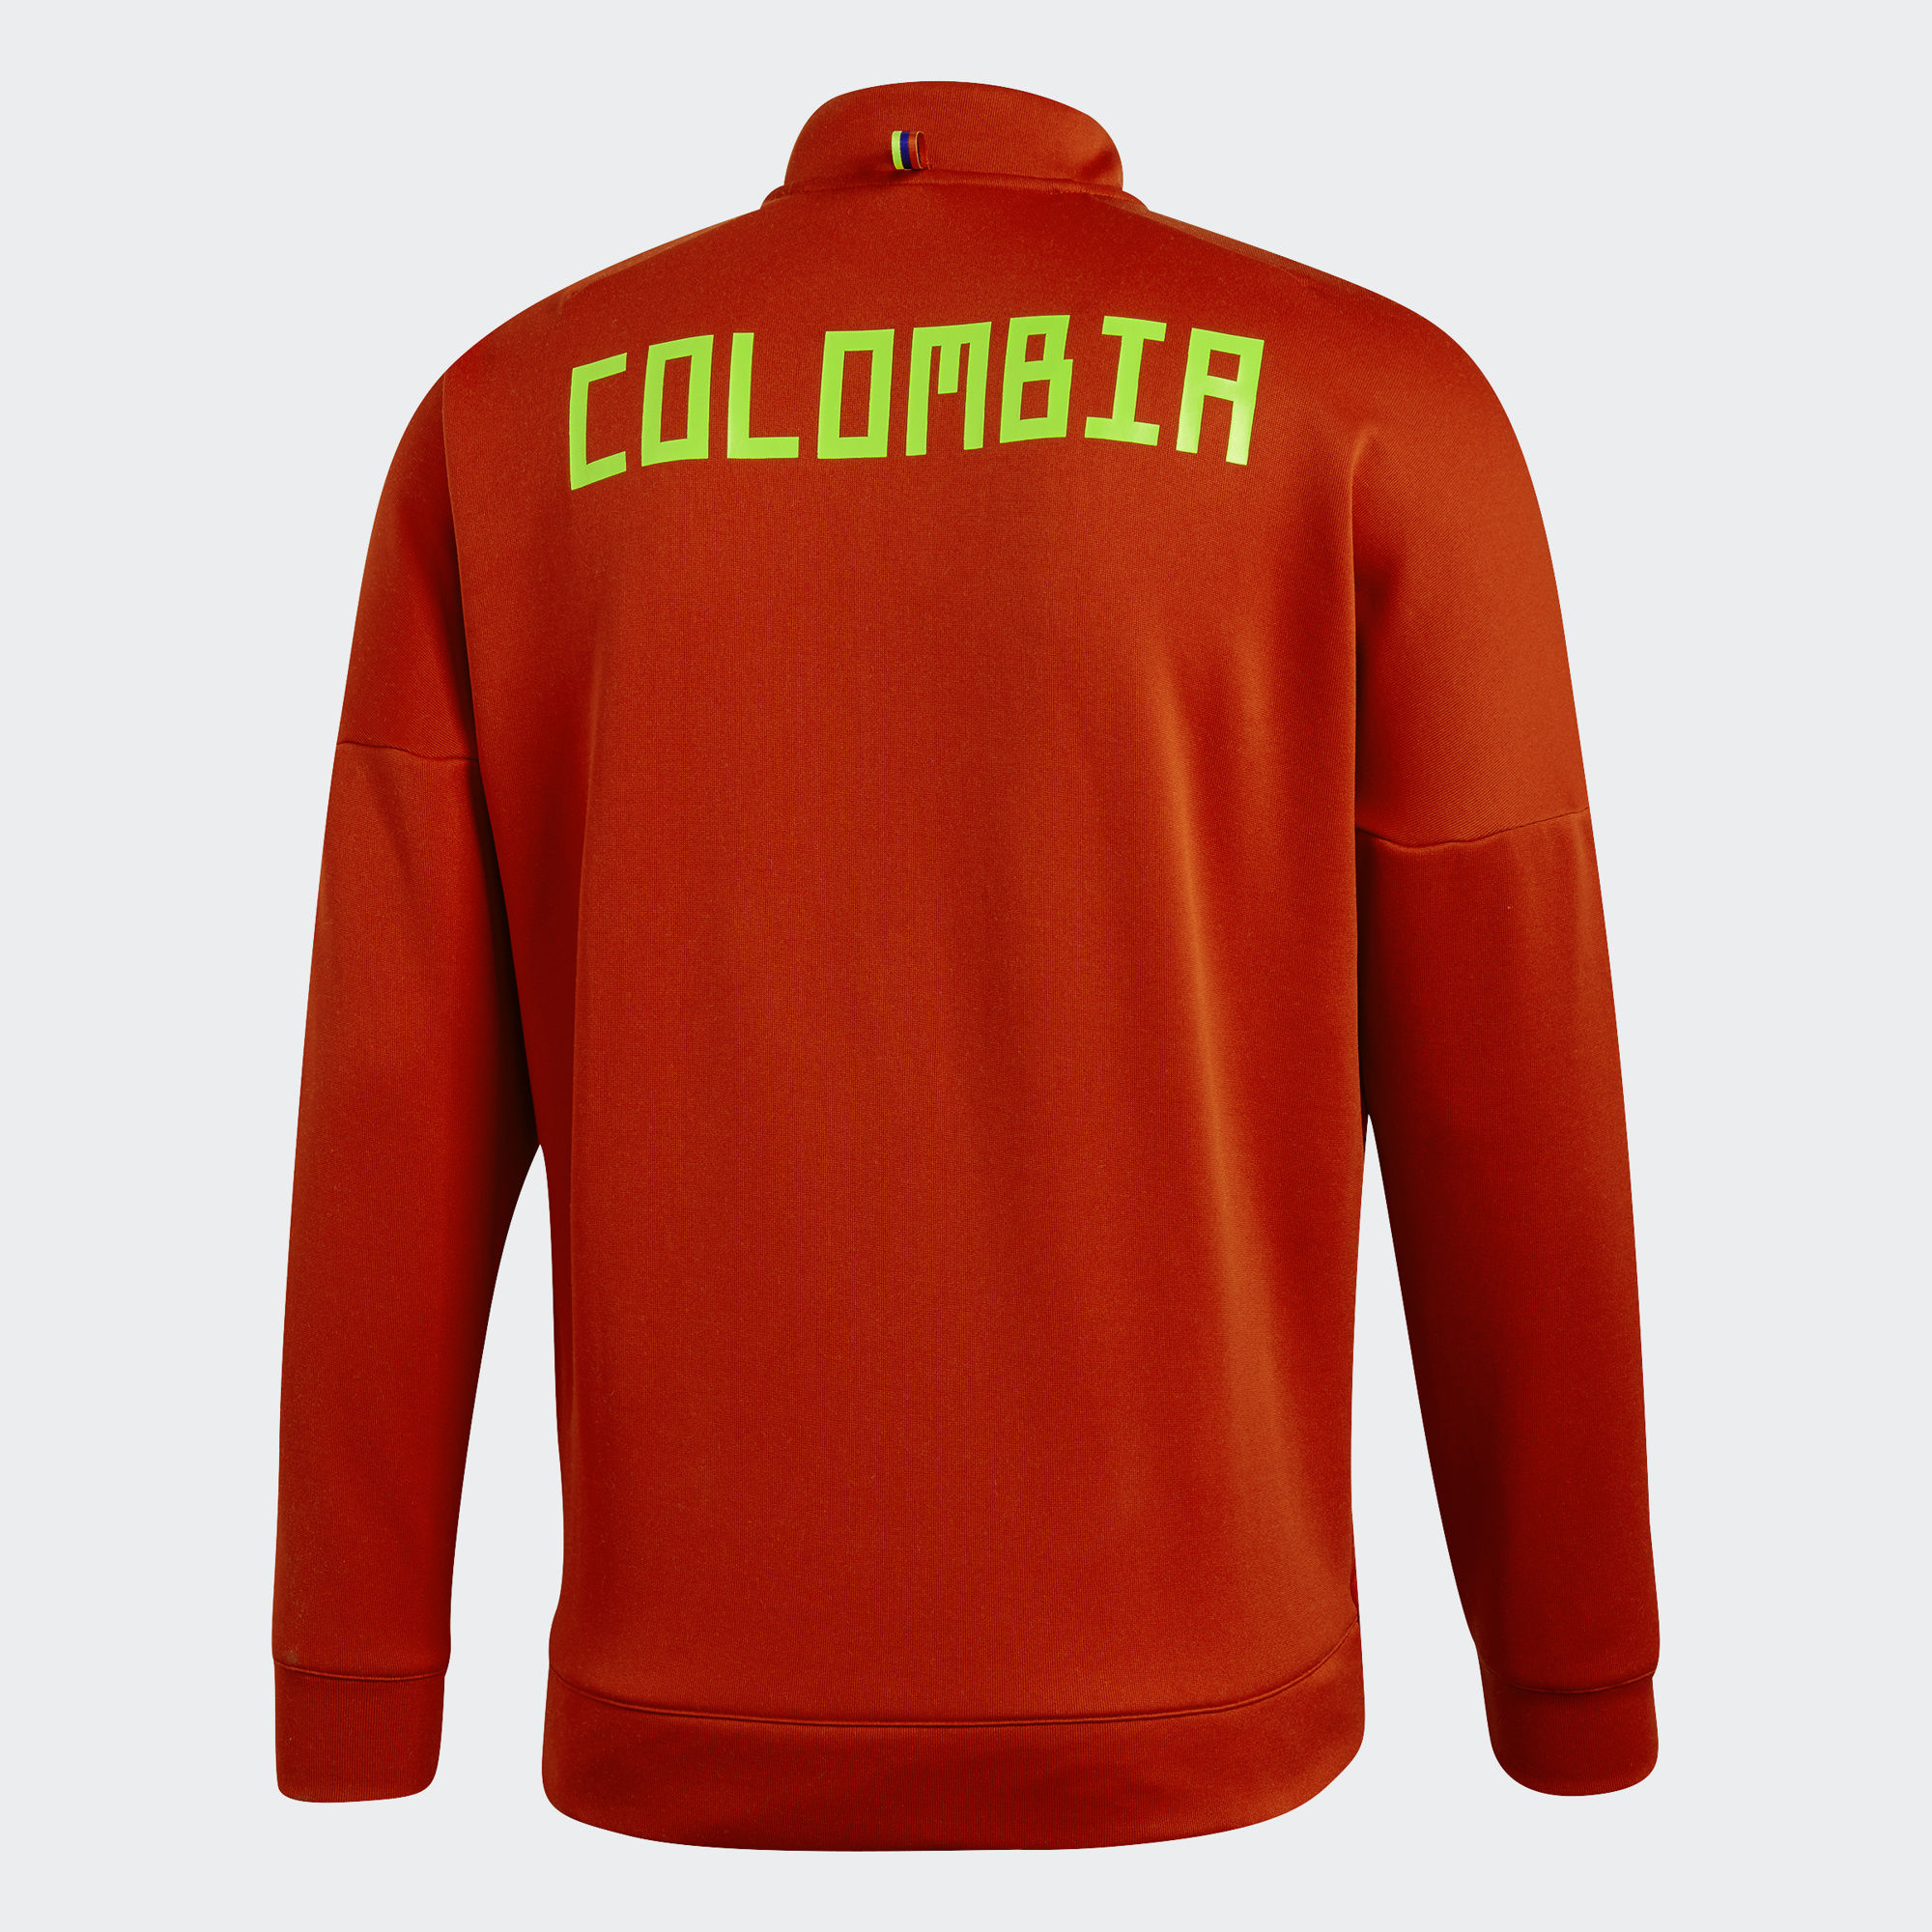 Colombia 2018 Adidas Z.N.E. Jacket - Scarlet | Equipment | Football